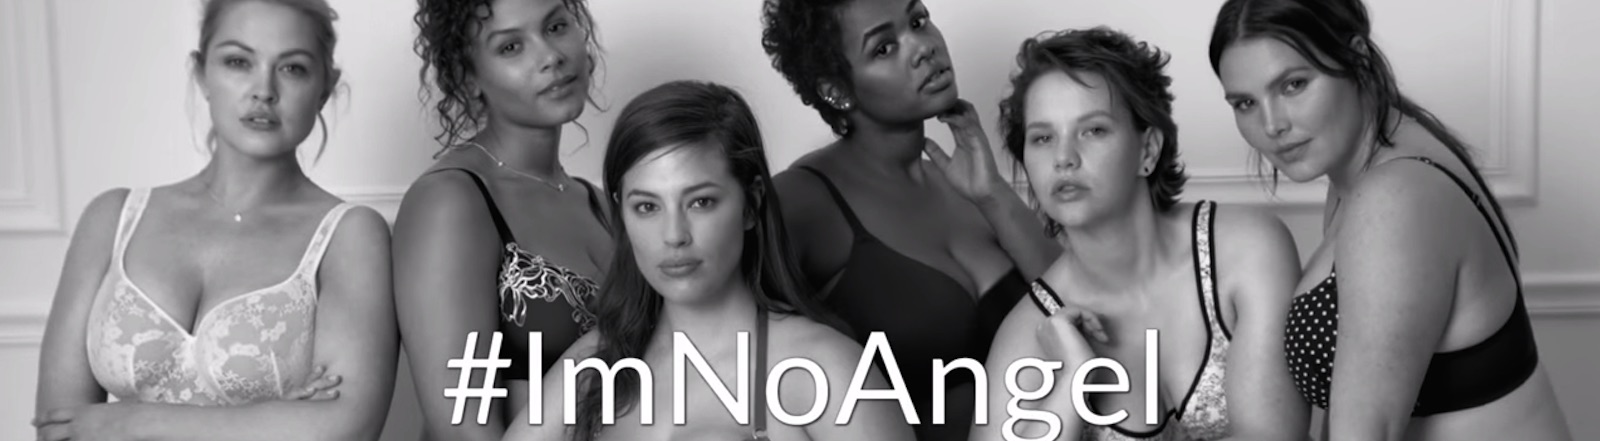 Lane Bryant's #ImNoAngel Campaign Takes on Victoria's Secret